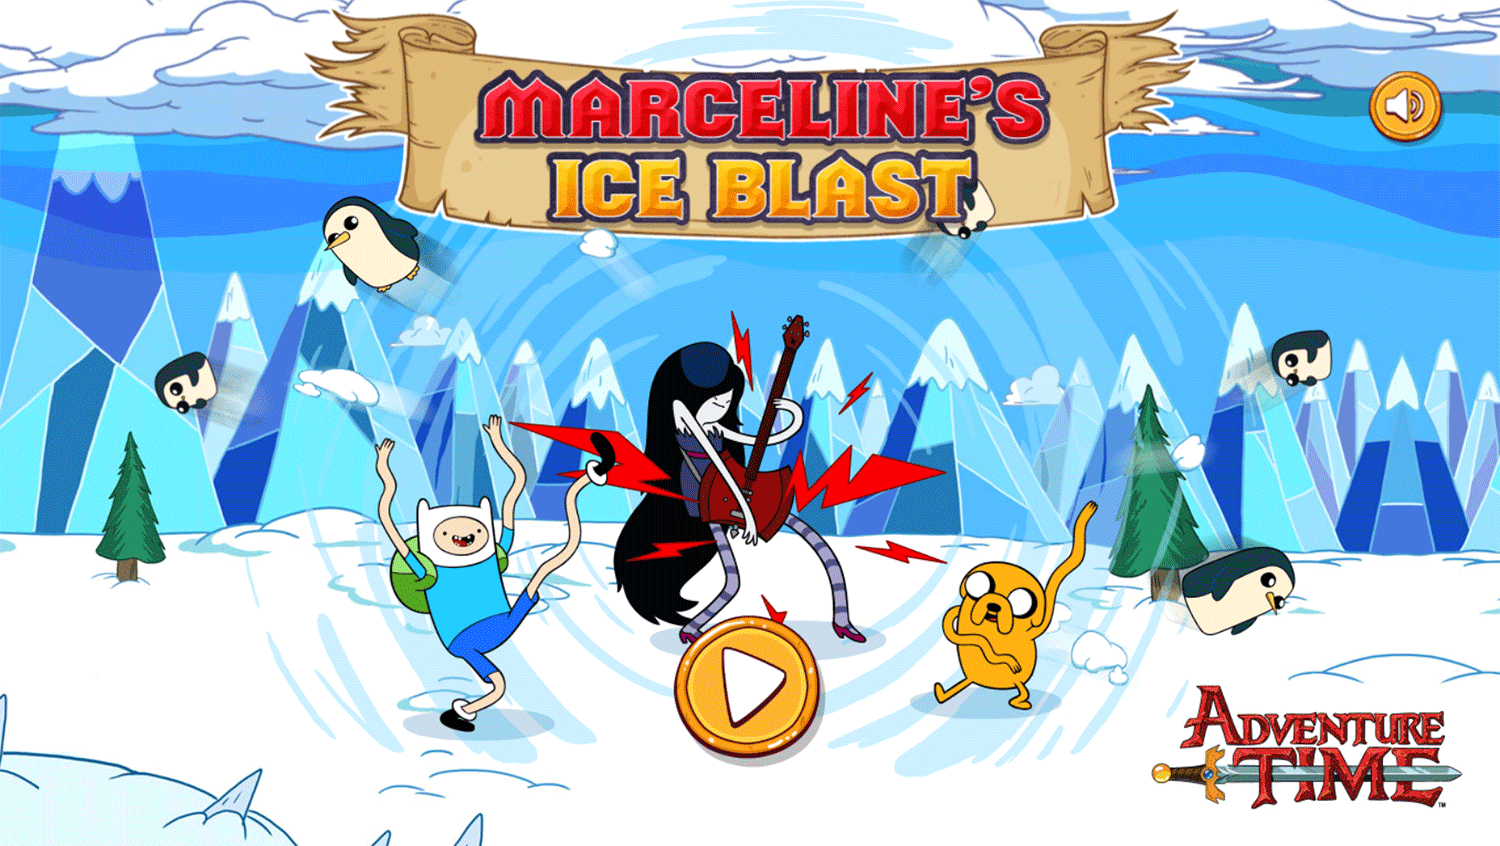 Adventure Time Mareceline's Ice Blast Game Welcome Screen Screenshot.